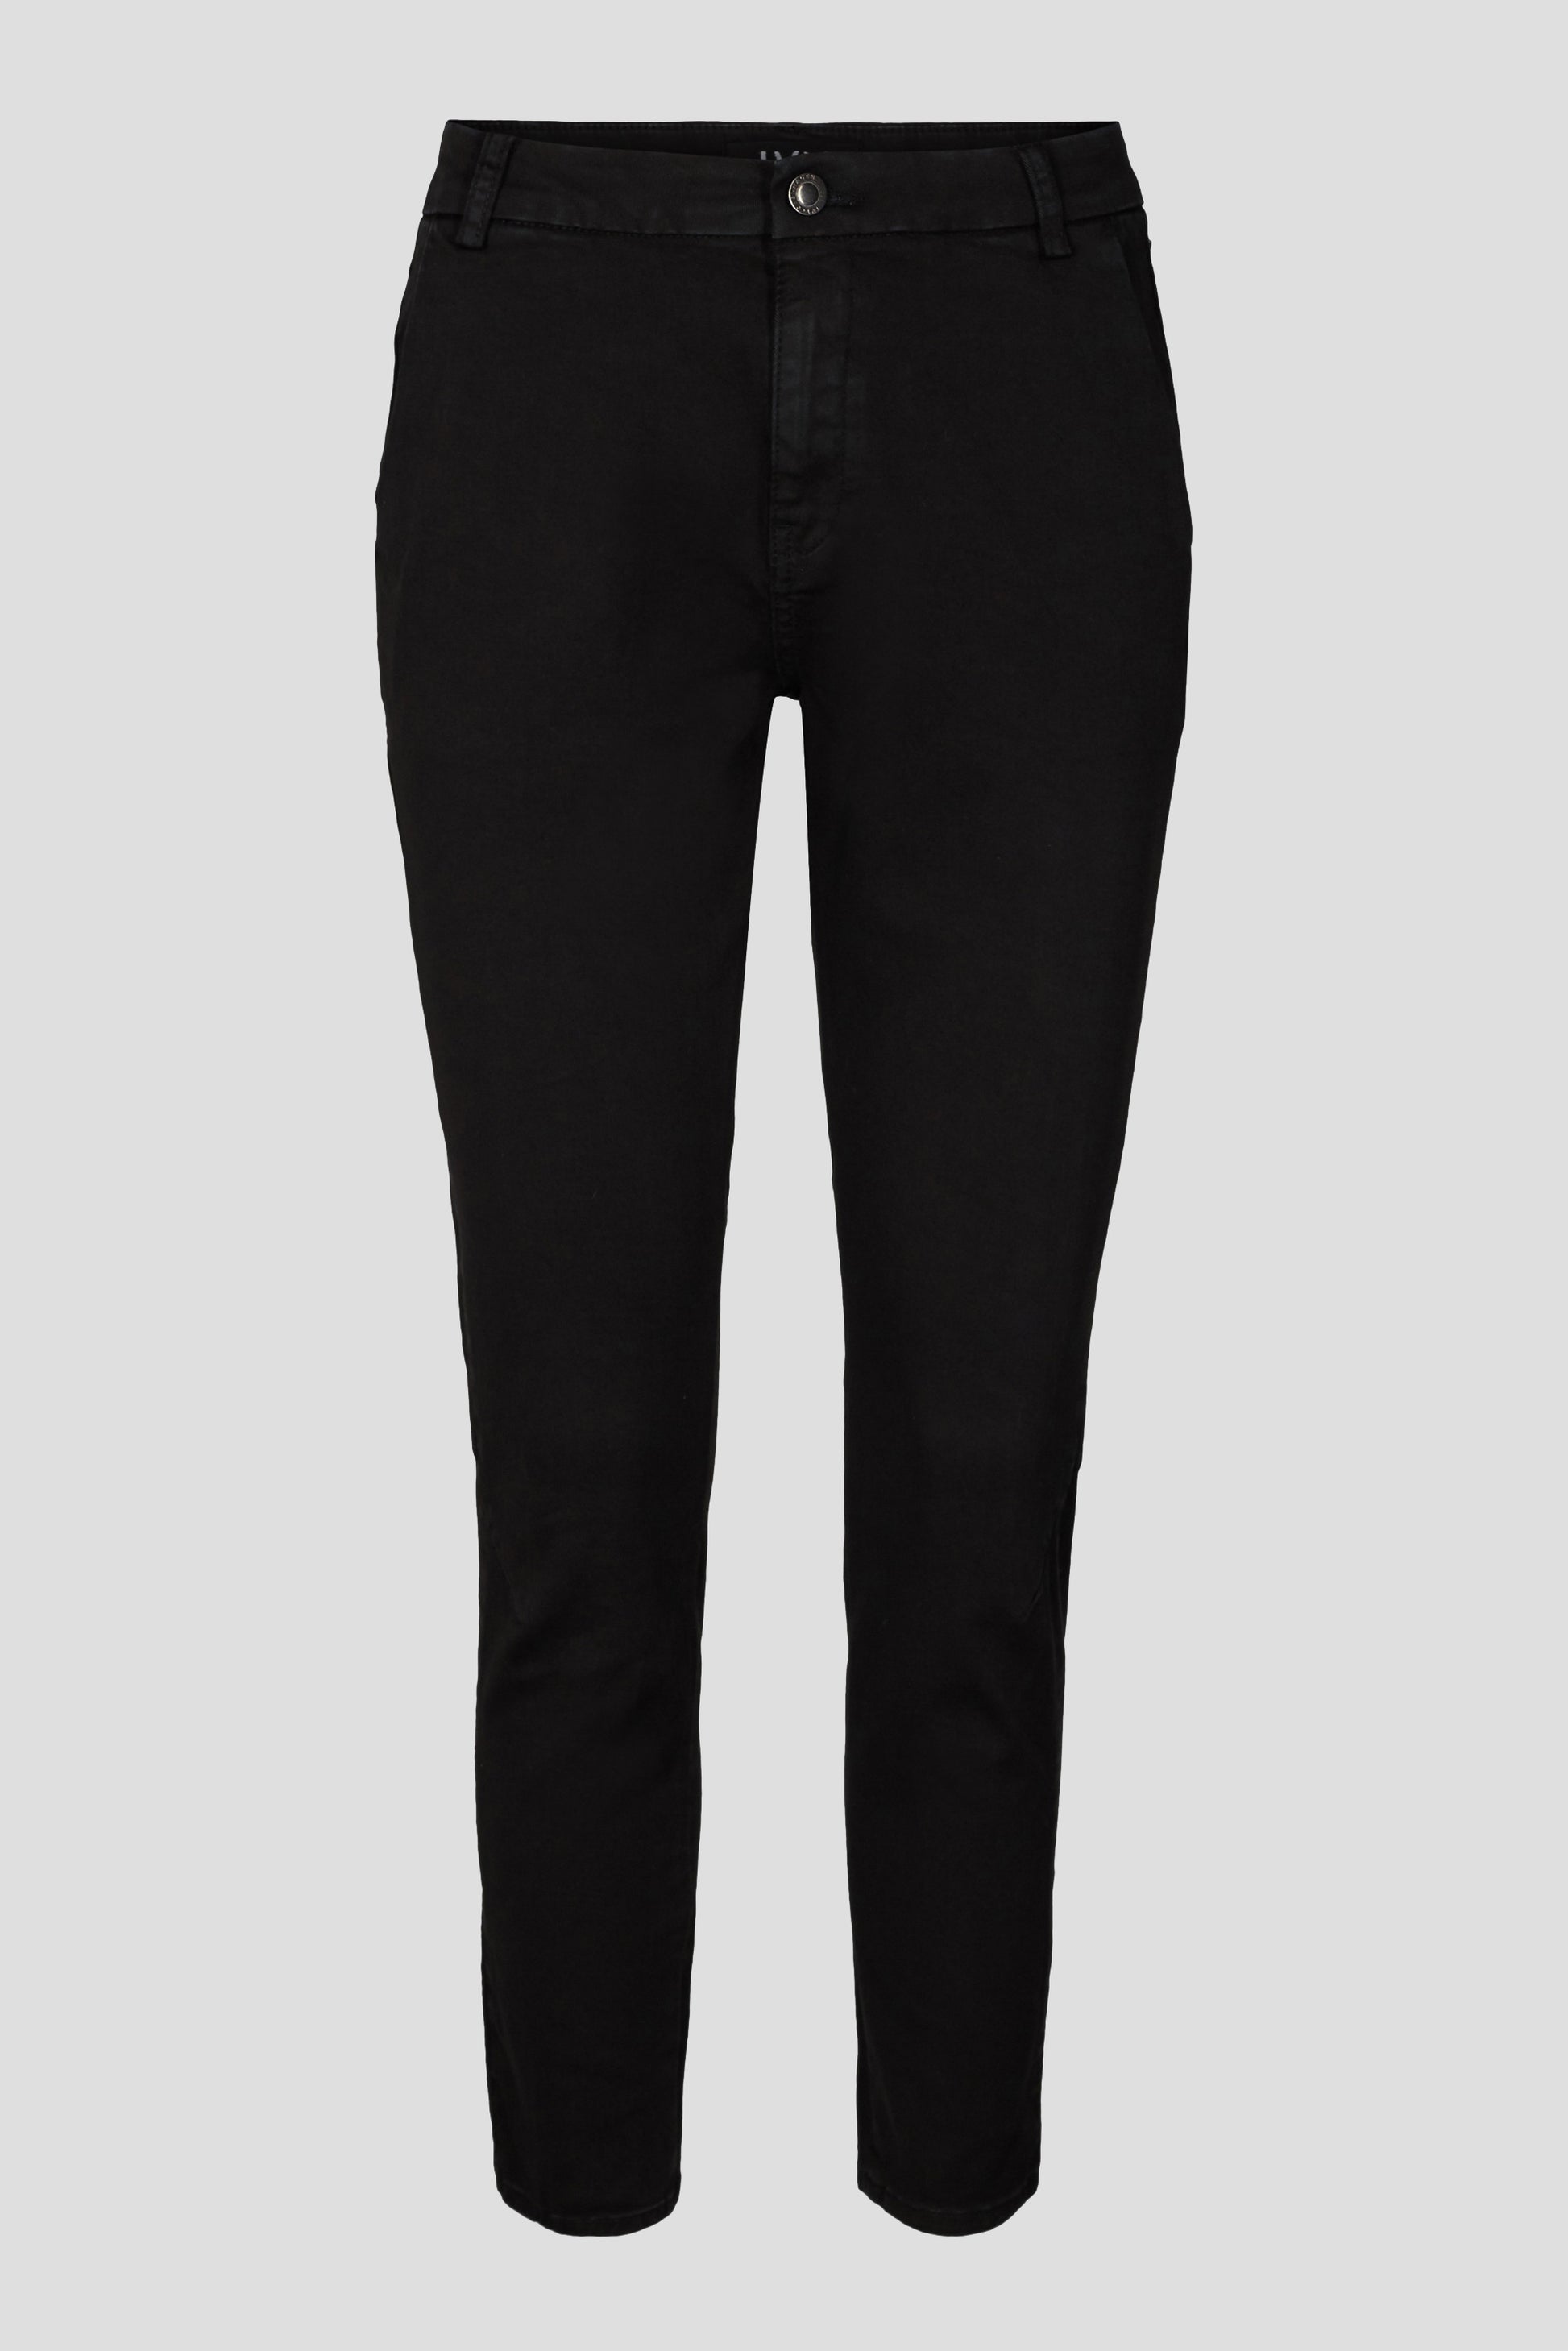 IVY Copenhagen IVY-Karmey chino Jeans & Pants 9 Black